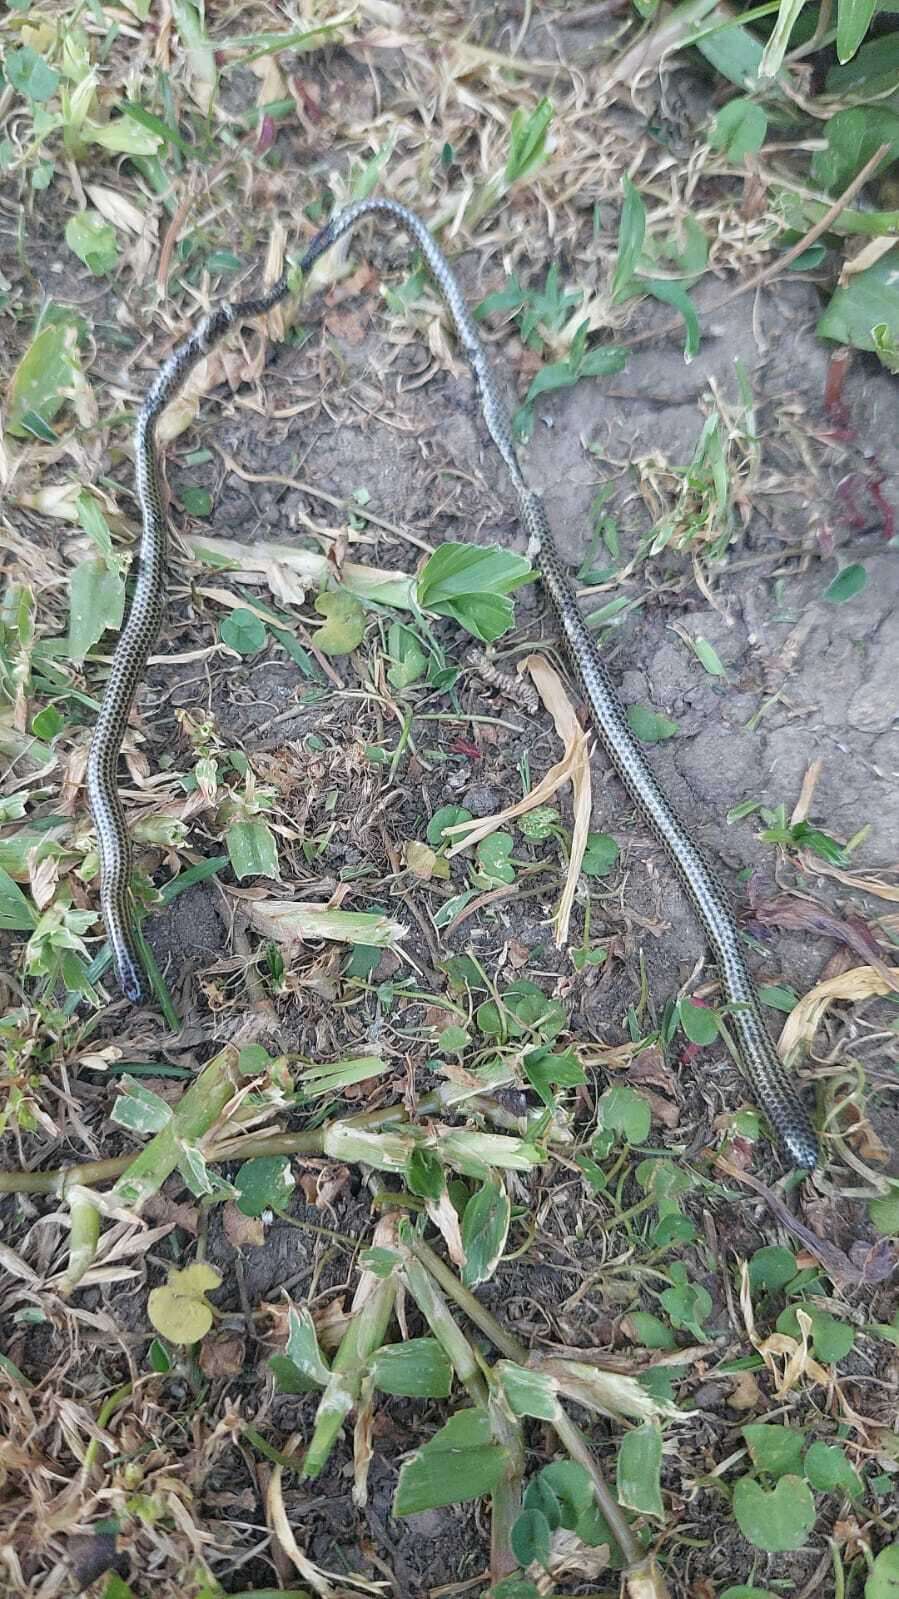 Image of Rio Grande do Sul Blind Snake